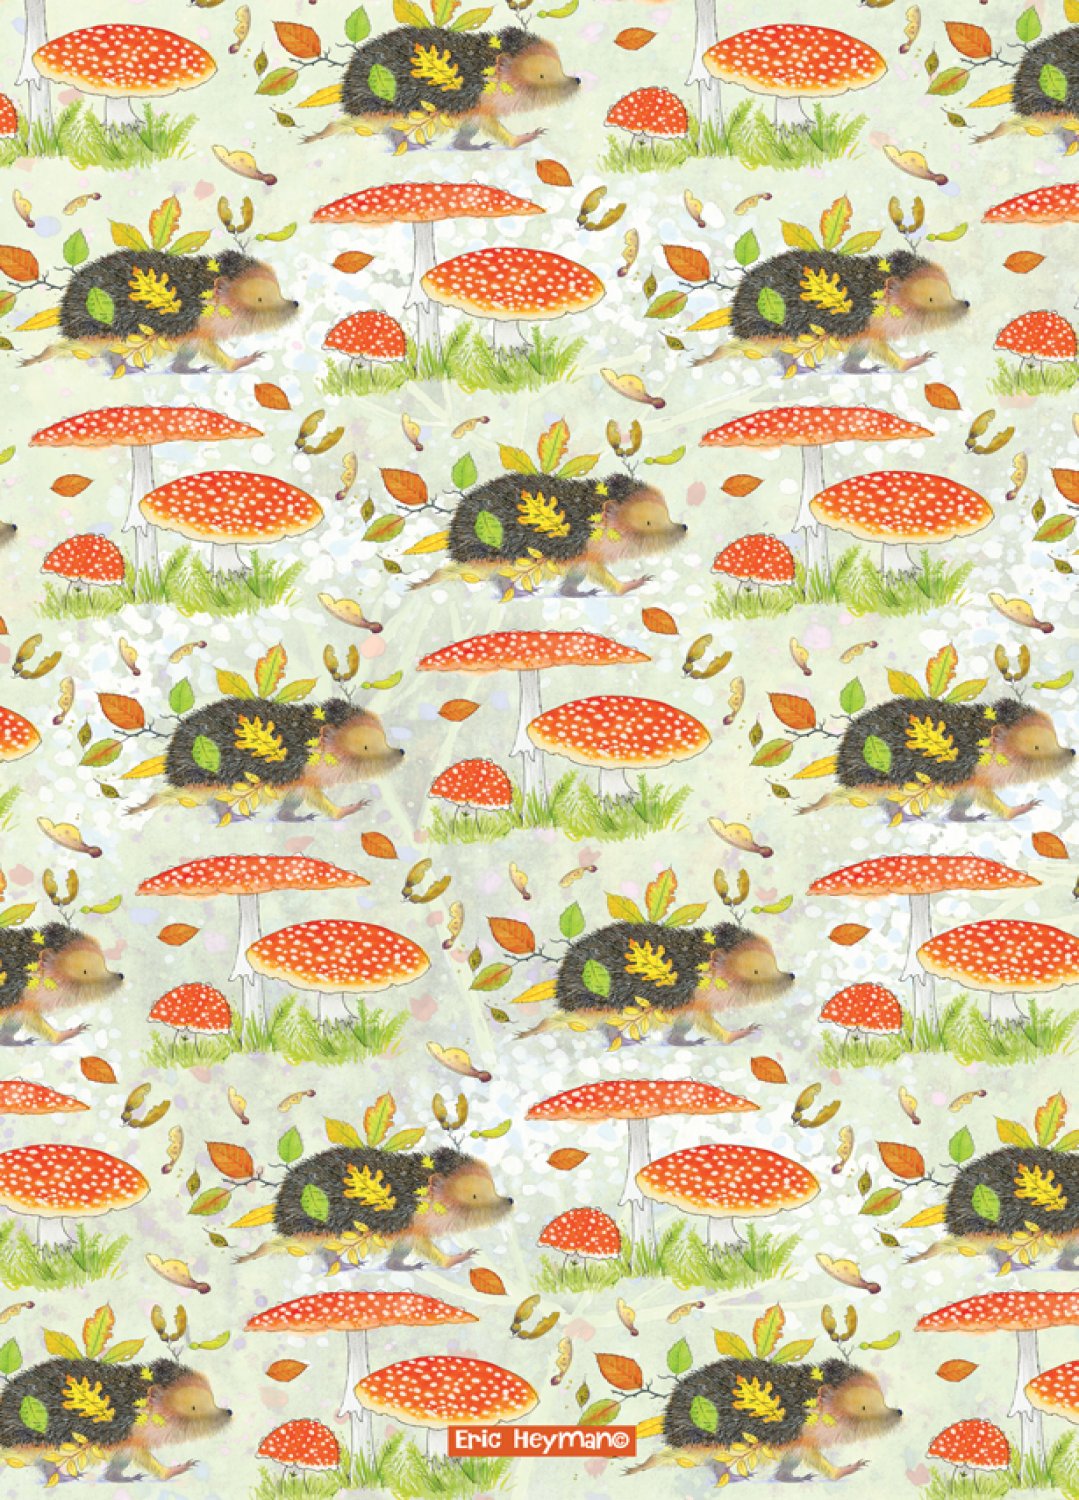 Emma Ball "Eric Heyman Hedgehogs", Pure cotton tea towel. Printed in the UK.